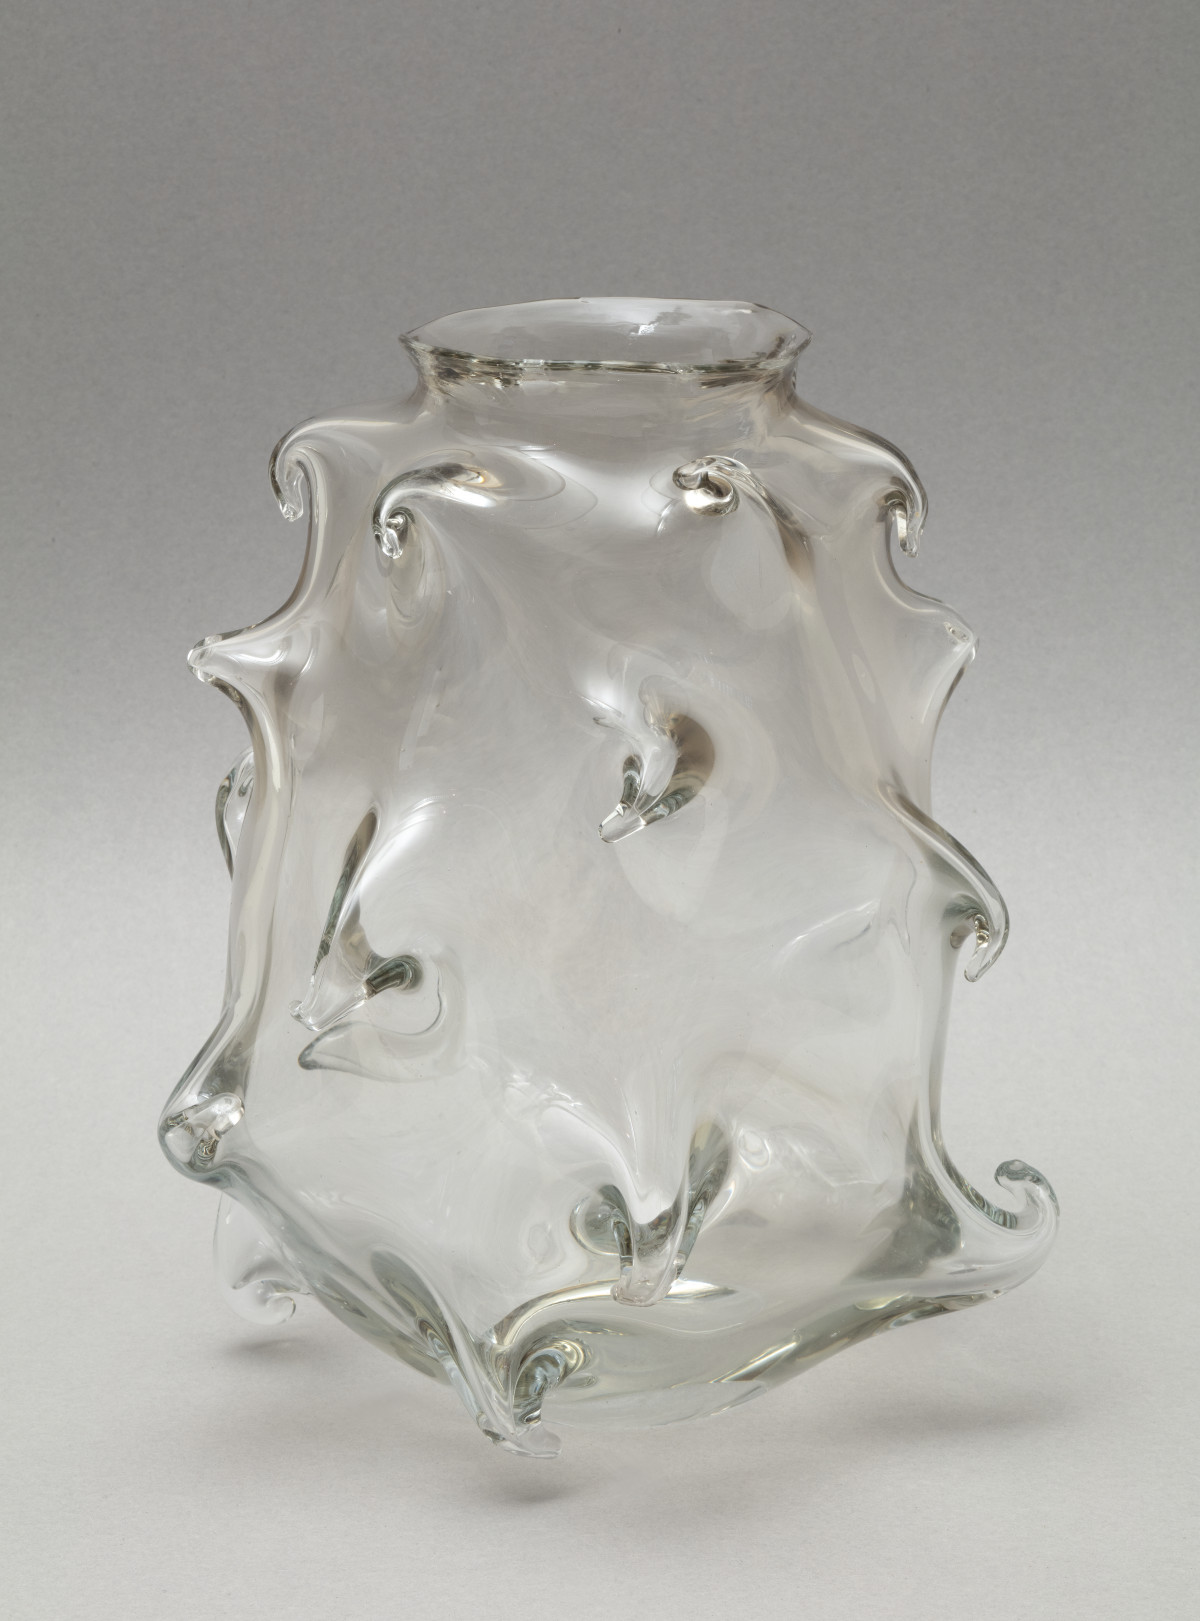 Tony Cragg, ‘Hungry Vase’, 2009, Murano glass